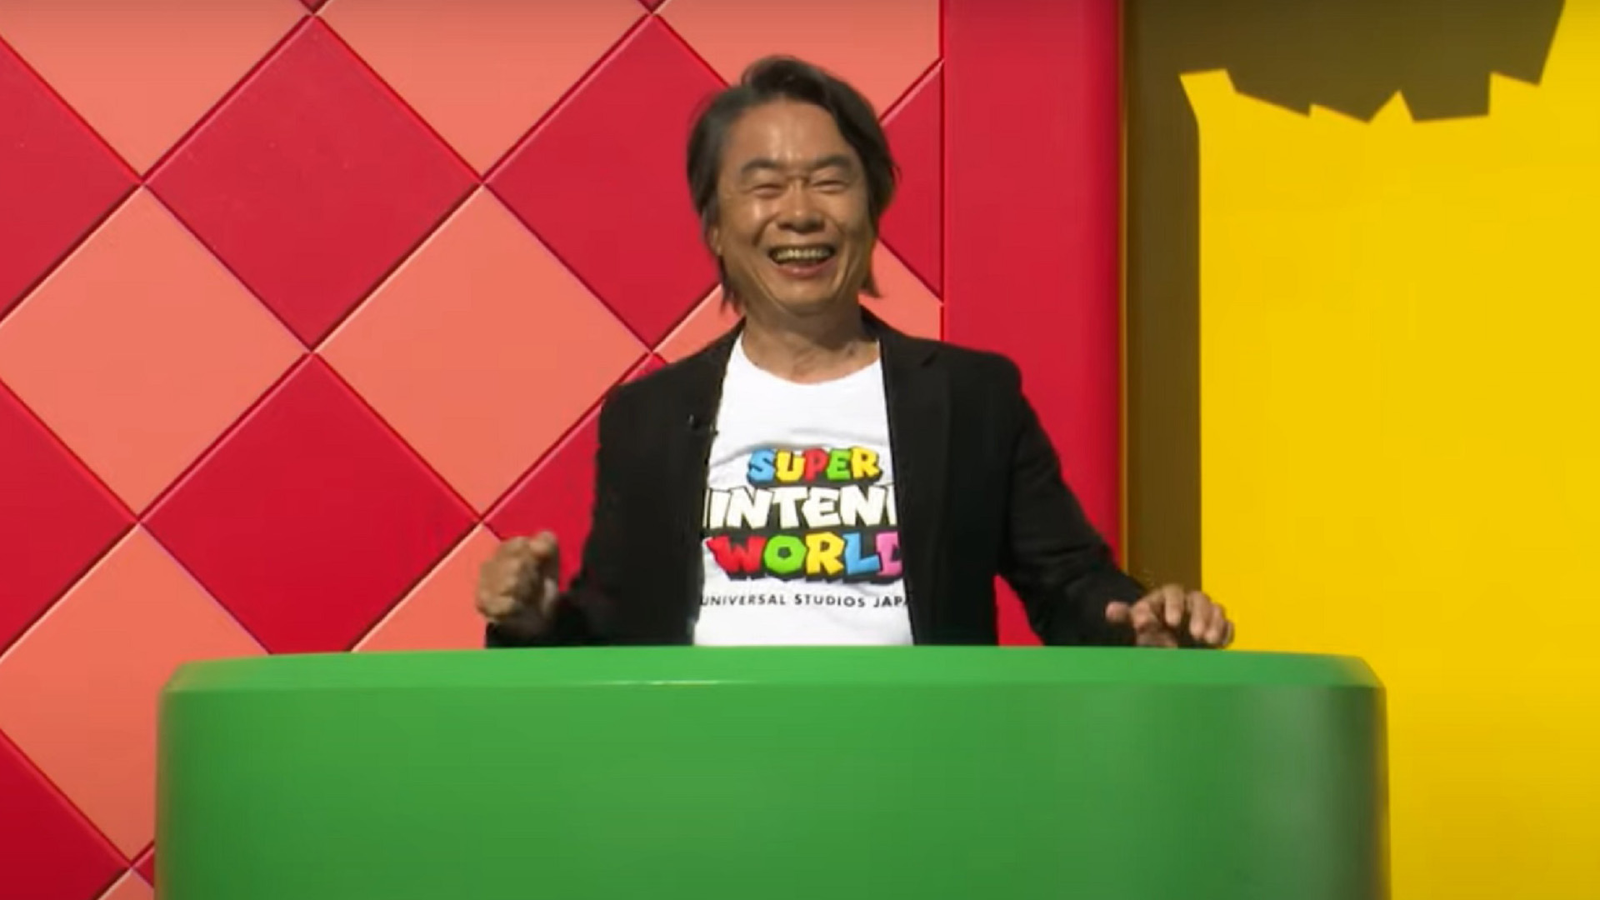 Here We Go, Shigeru Miyamoto!